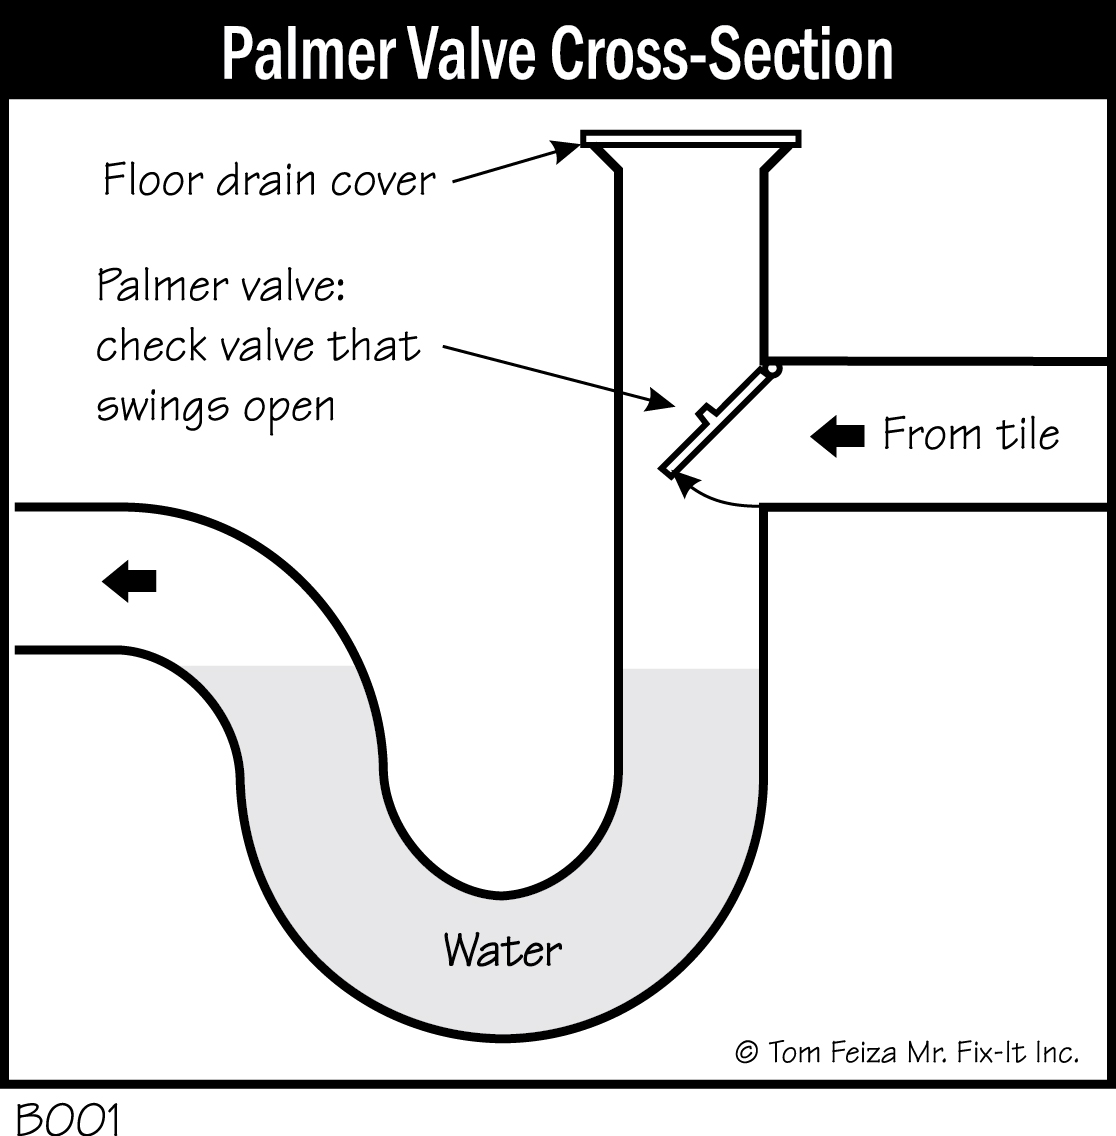 B001 - Palmer Valve Cross-Section